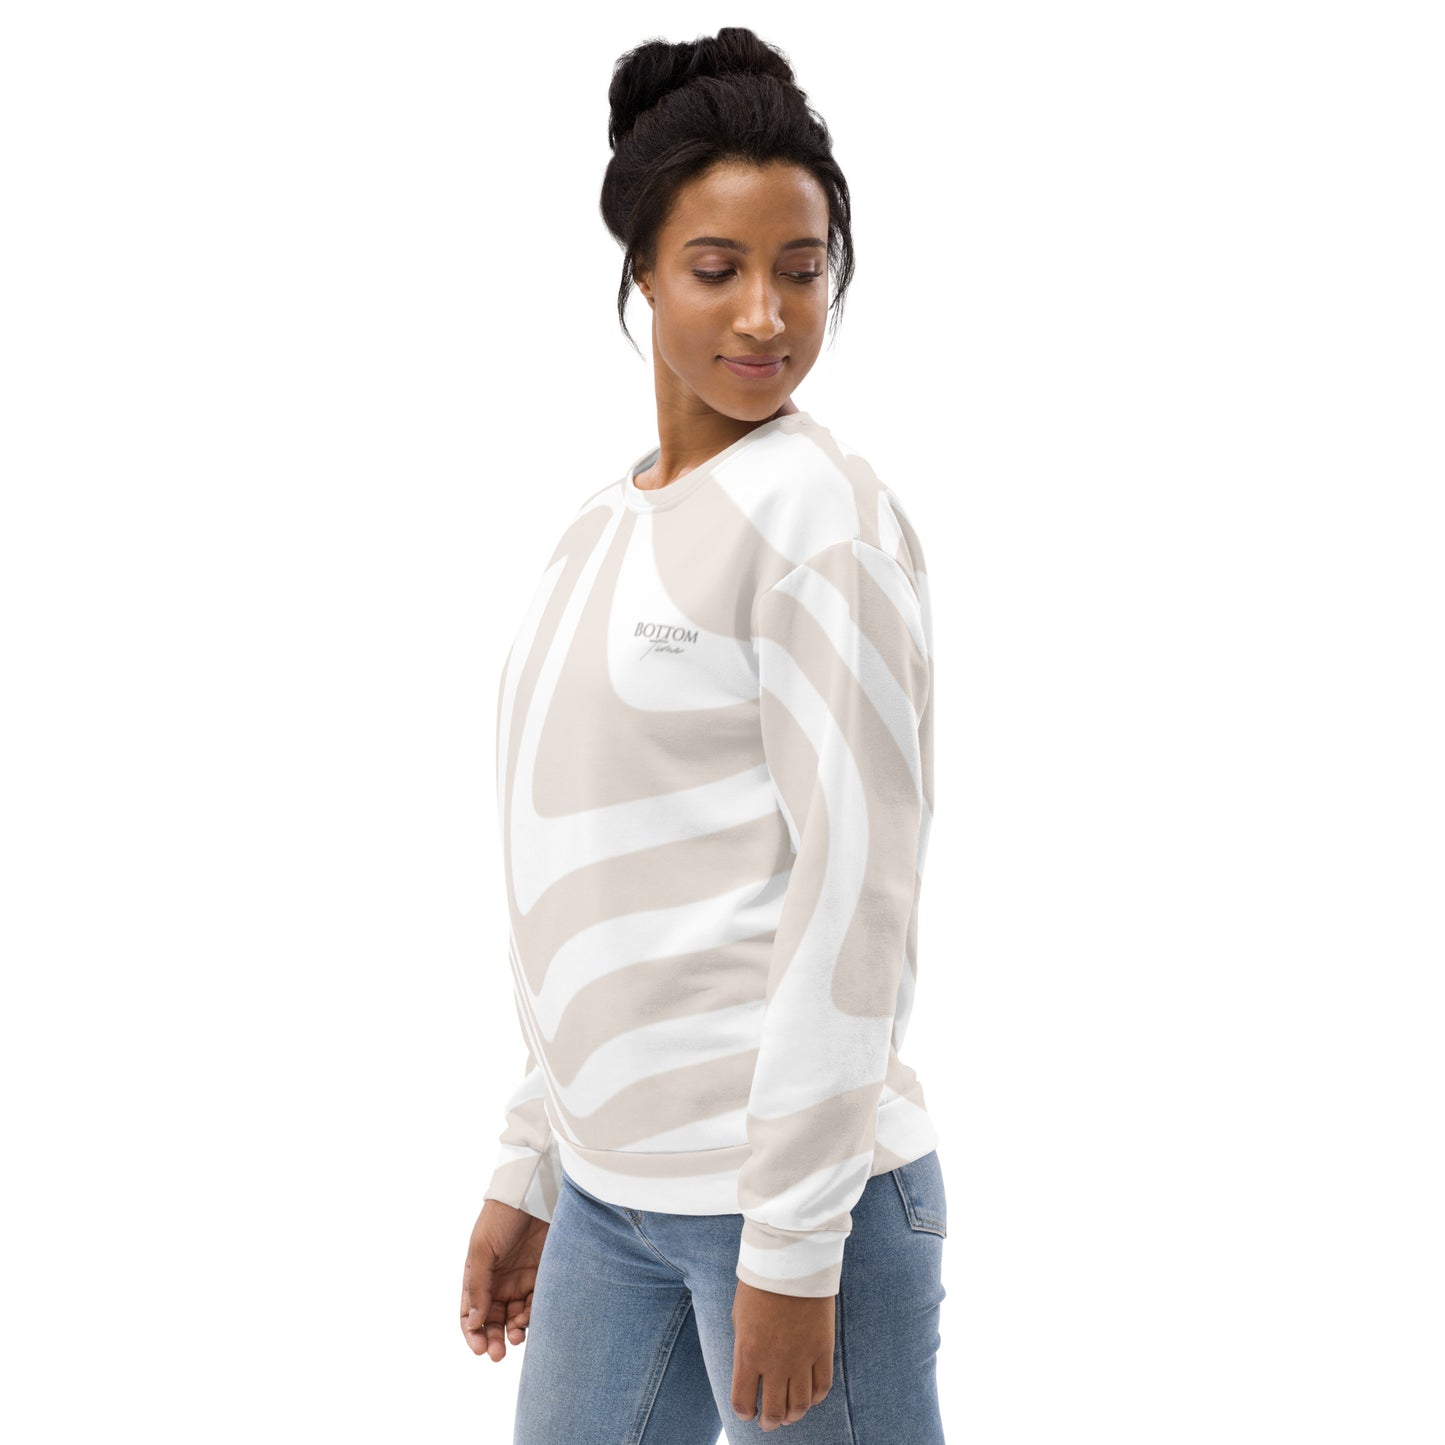 Bottom Time™ Eco-Friendly, Unisex Sweatshirt, Sets